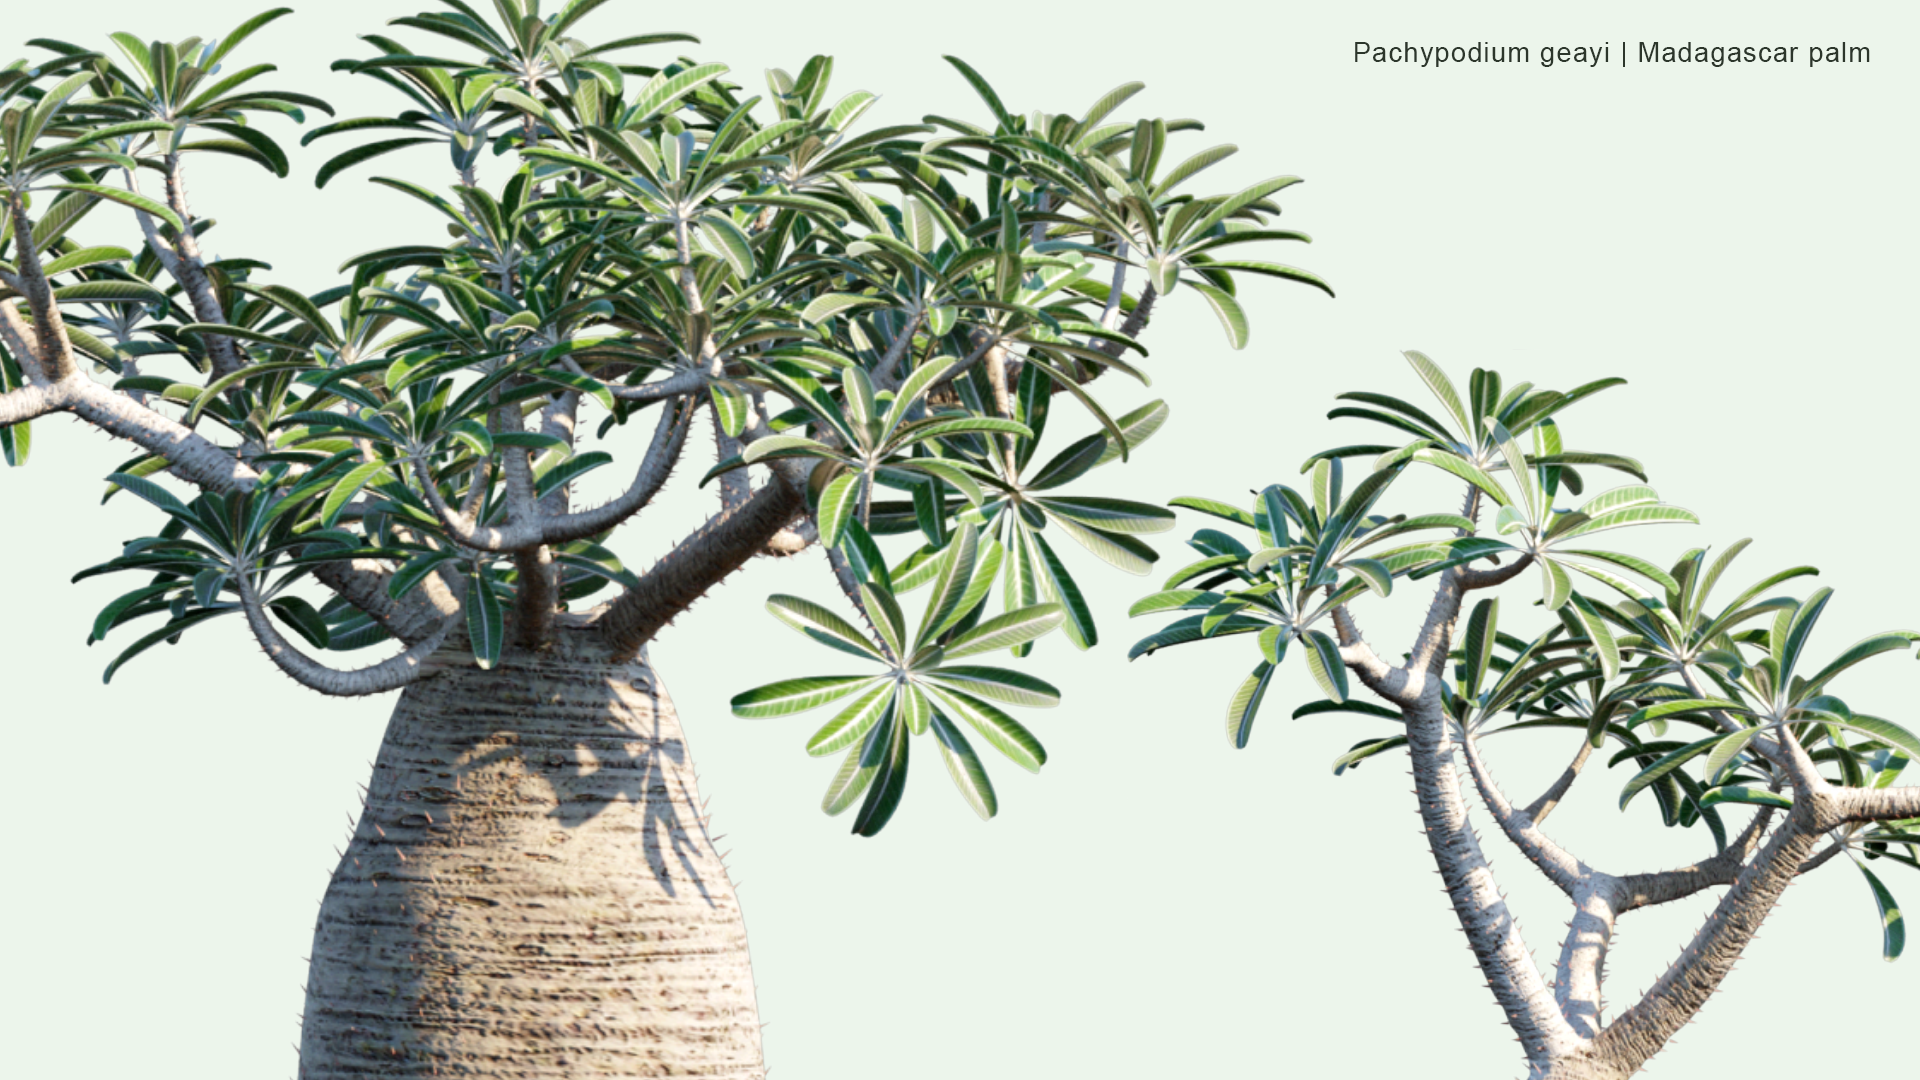 2D Pachypodium Geayi - Madagascar Palm